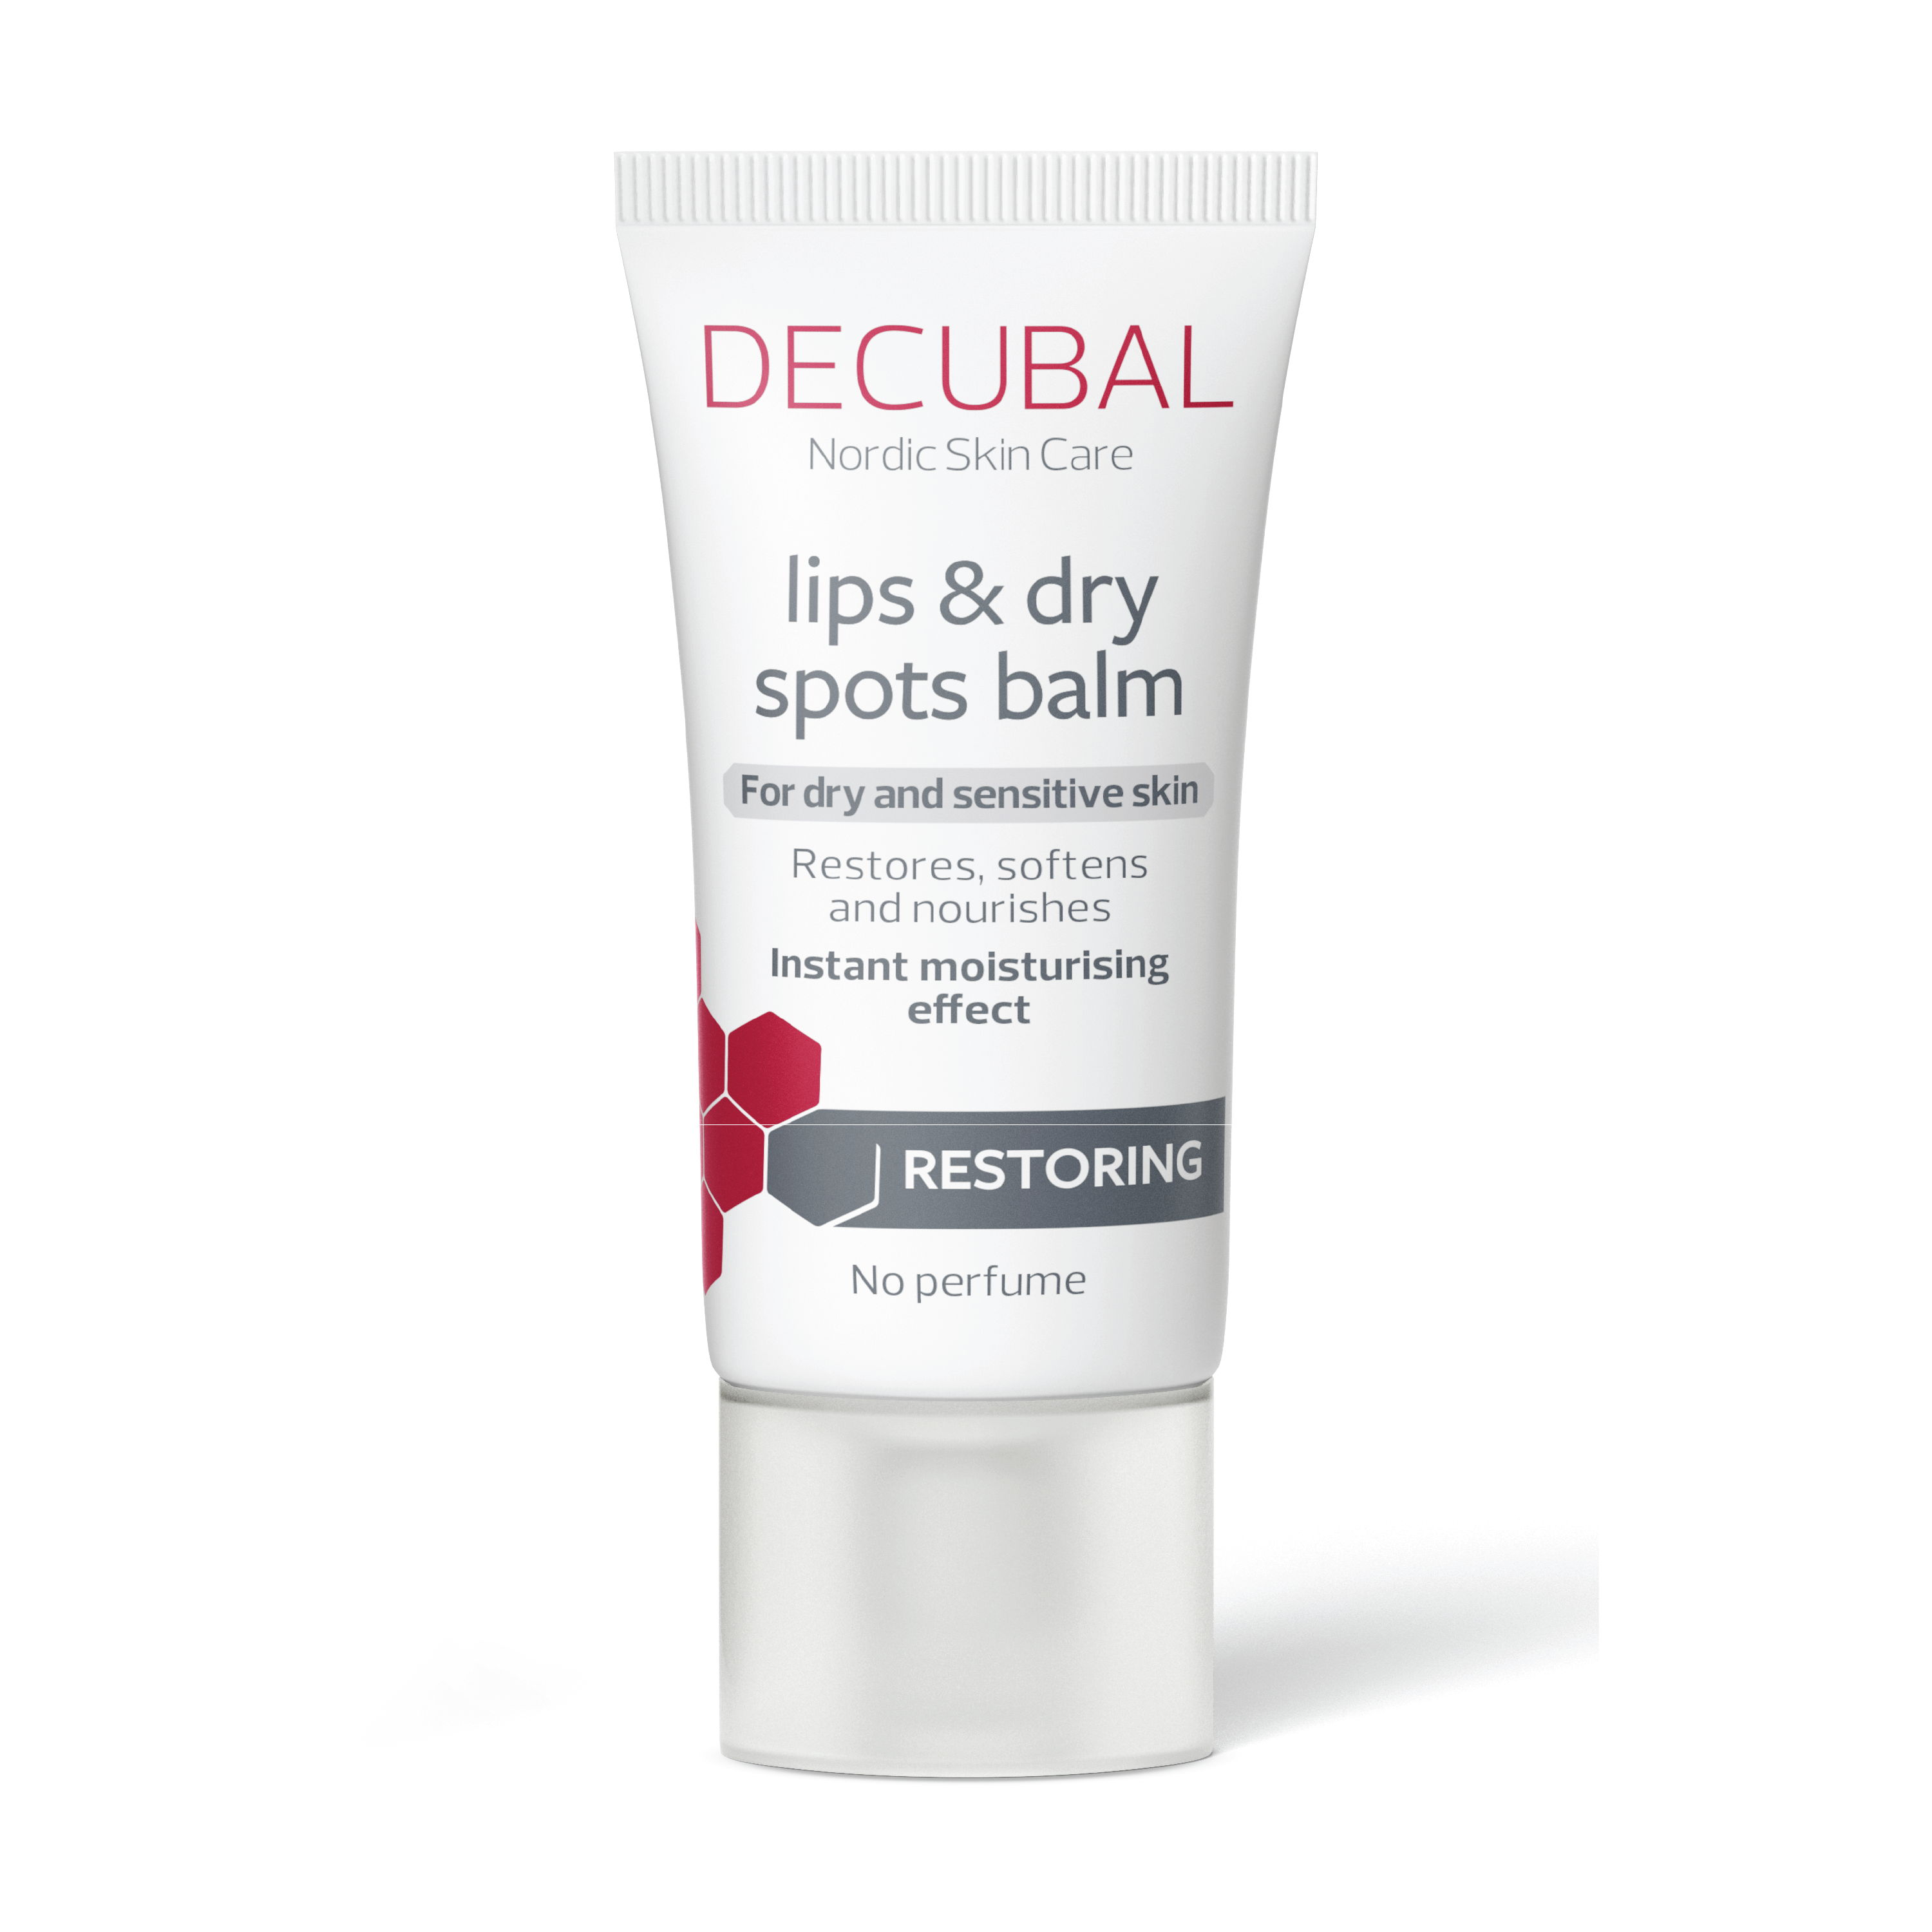 Decubal Lips & Dry Spots Balm Daily, 30 ml